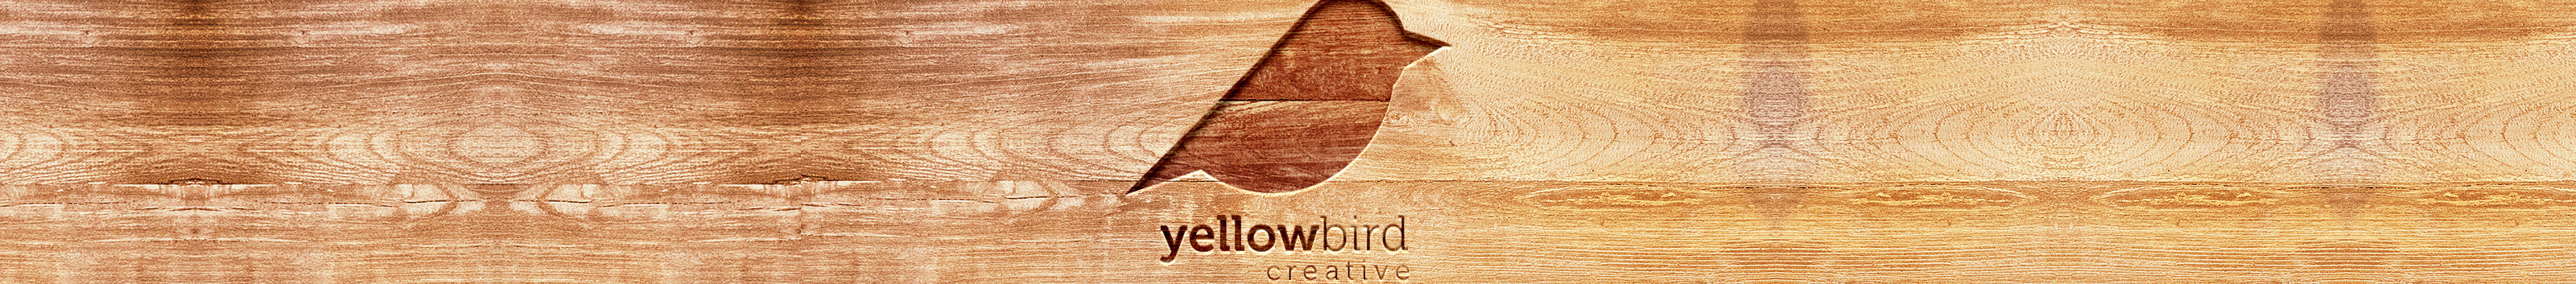 YellowBird Creative's profile banner